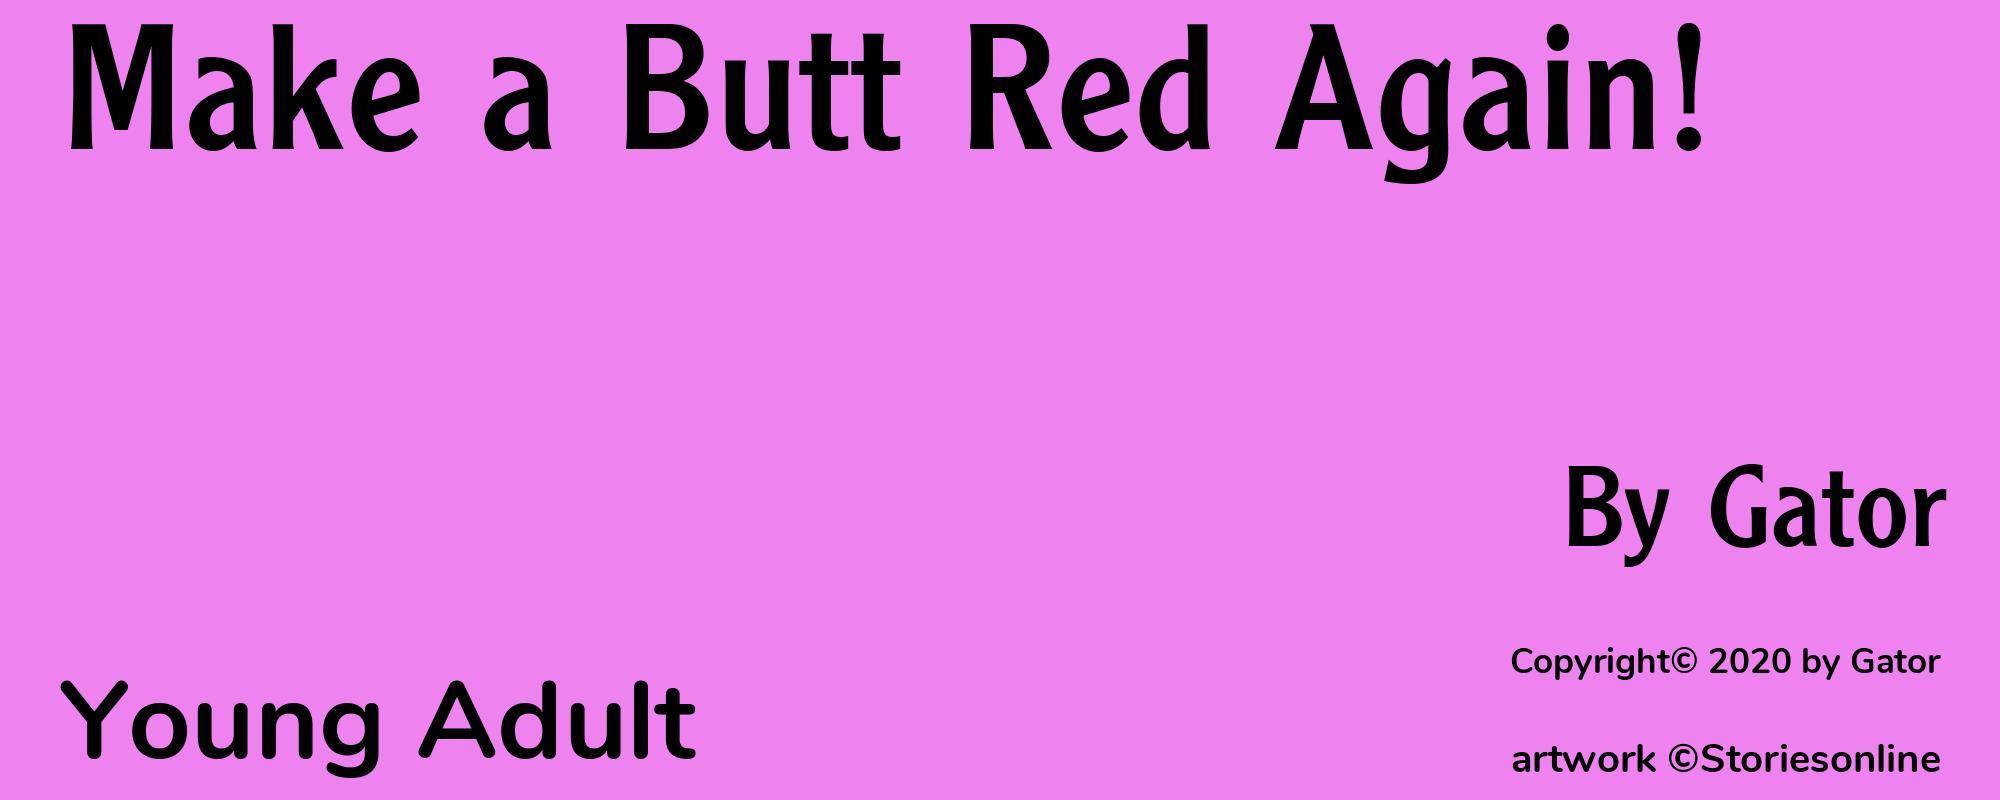 Make a Butt Red Again! - Cover